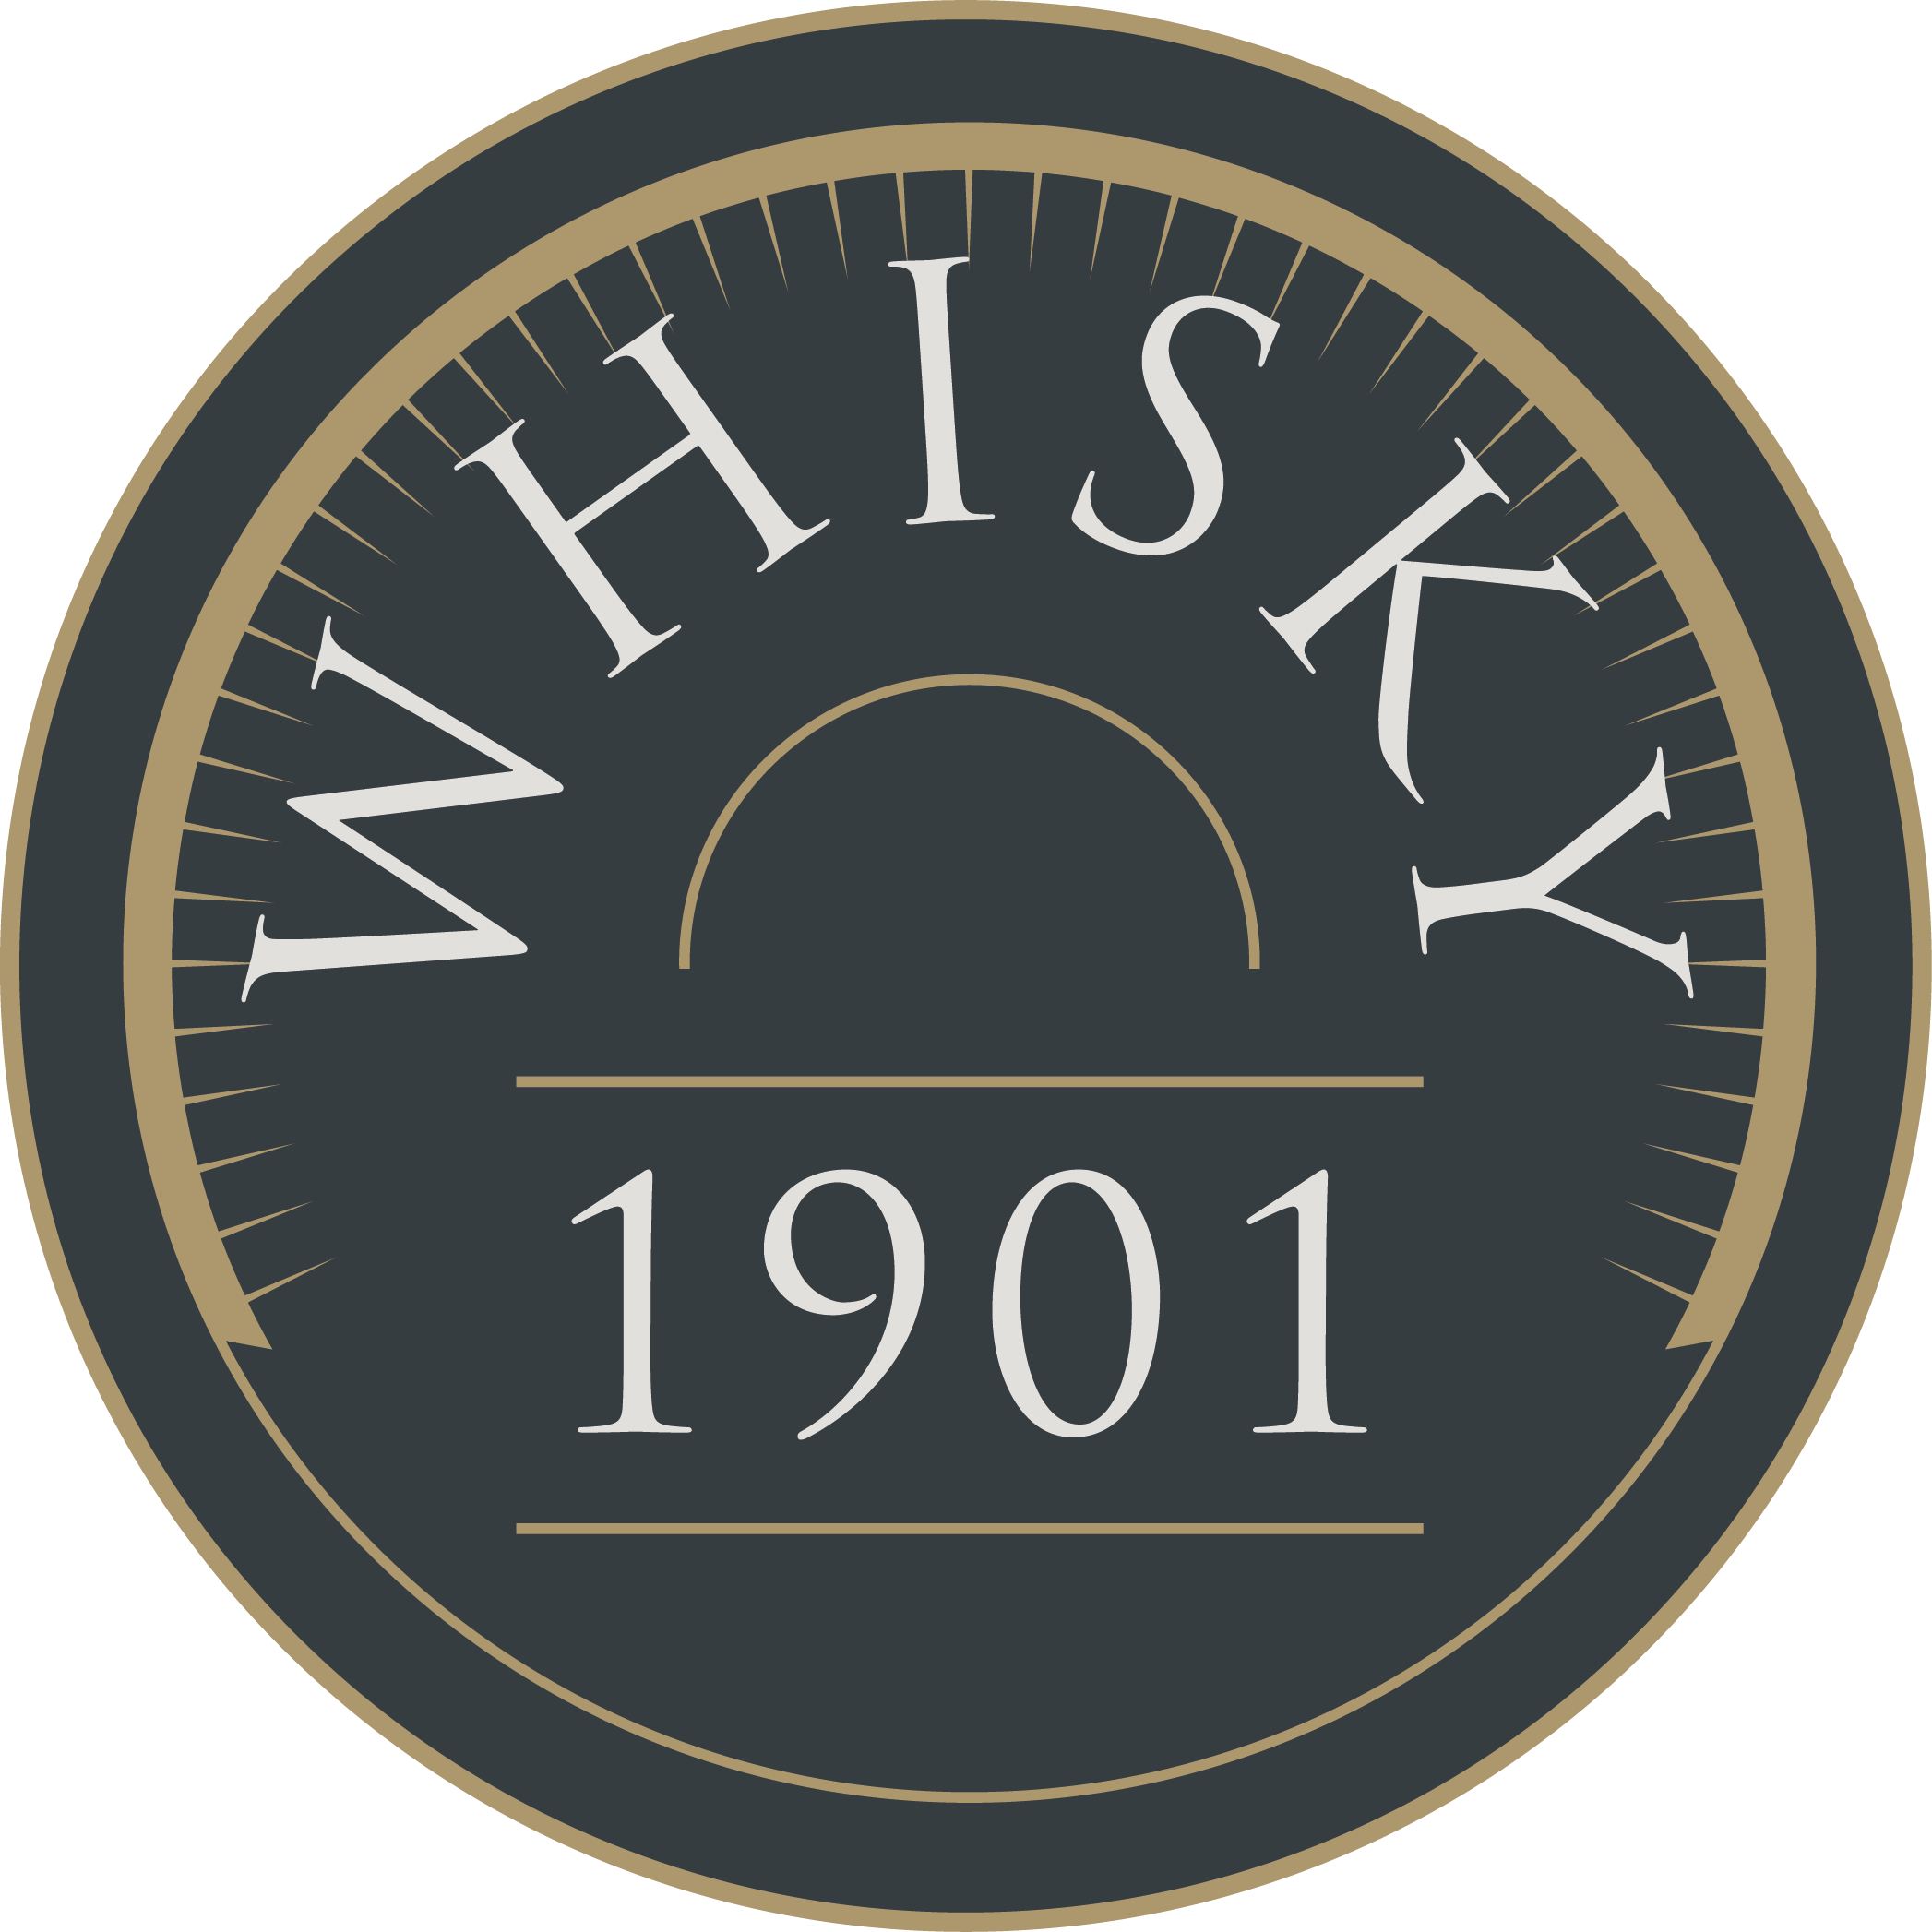 Whisky 1901 Logo